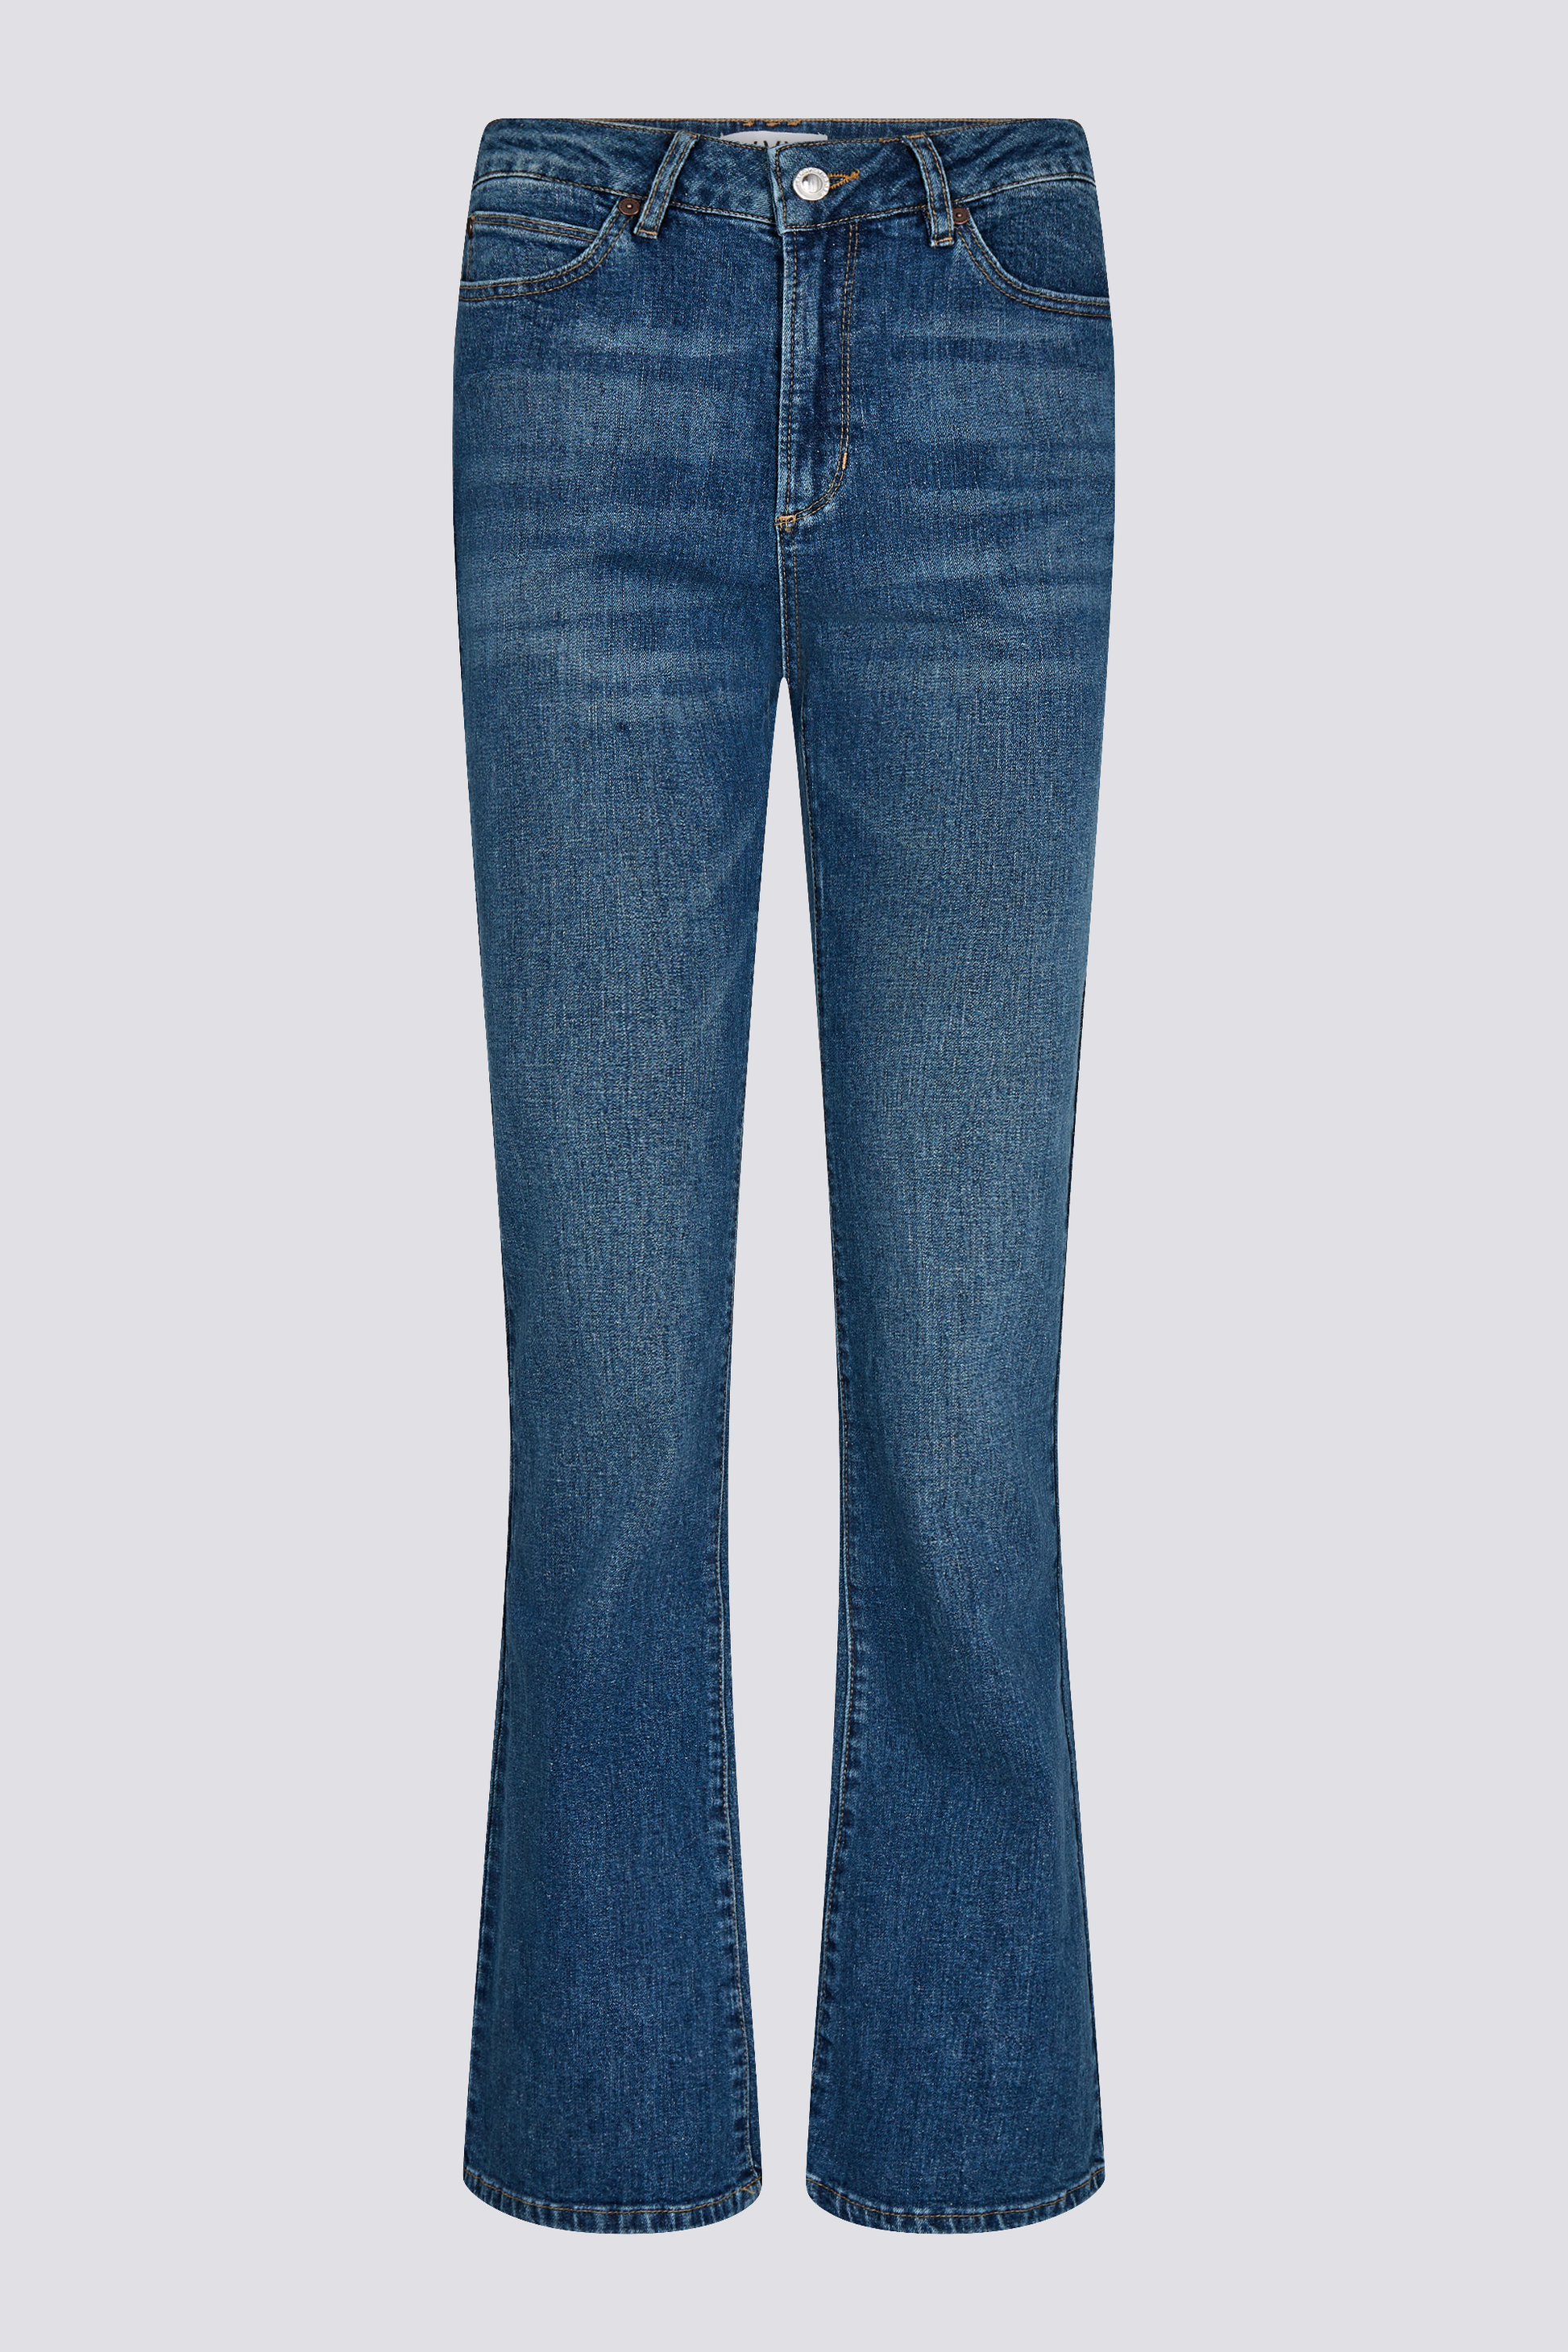 IVY Copenhagen IVY-Tara Jeans Wash Liverpool Street Jeans & Pants 51 Denim Blue